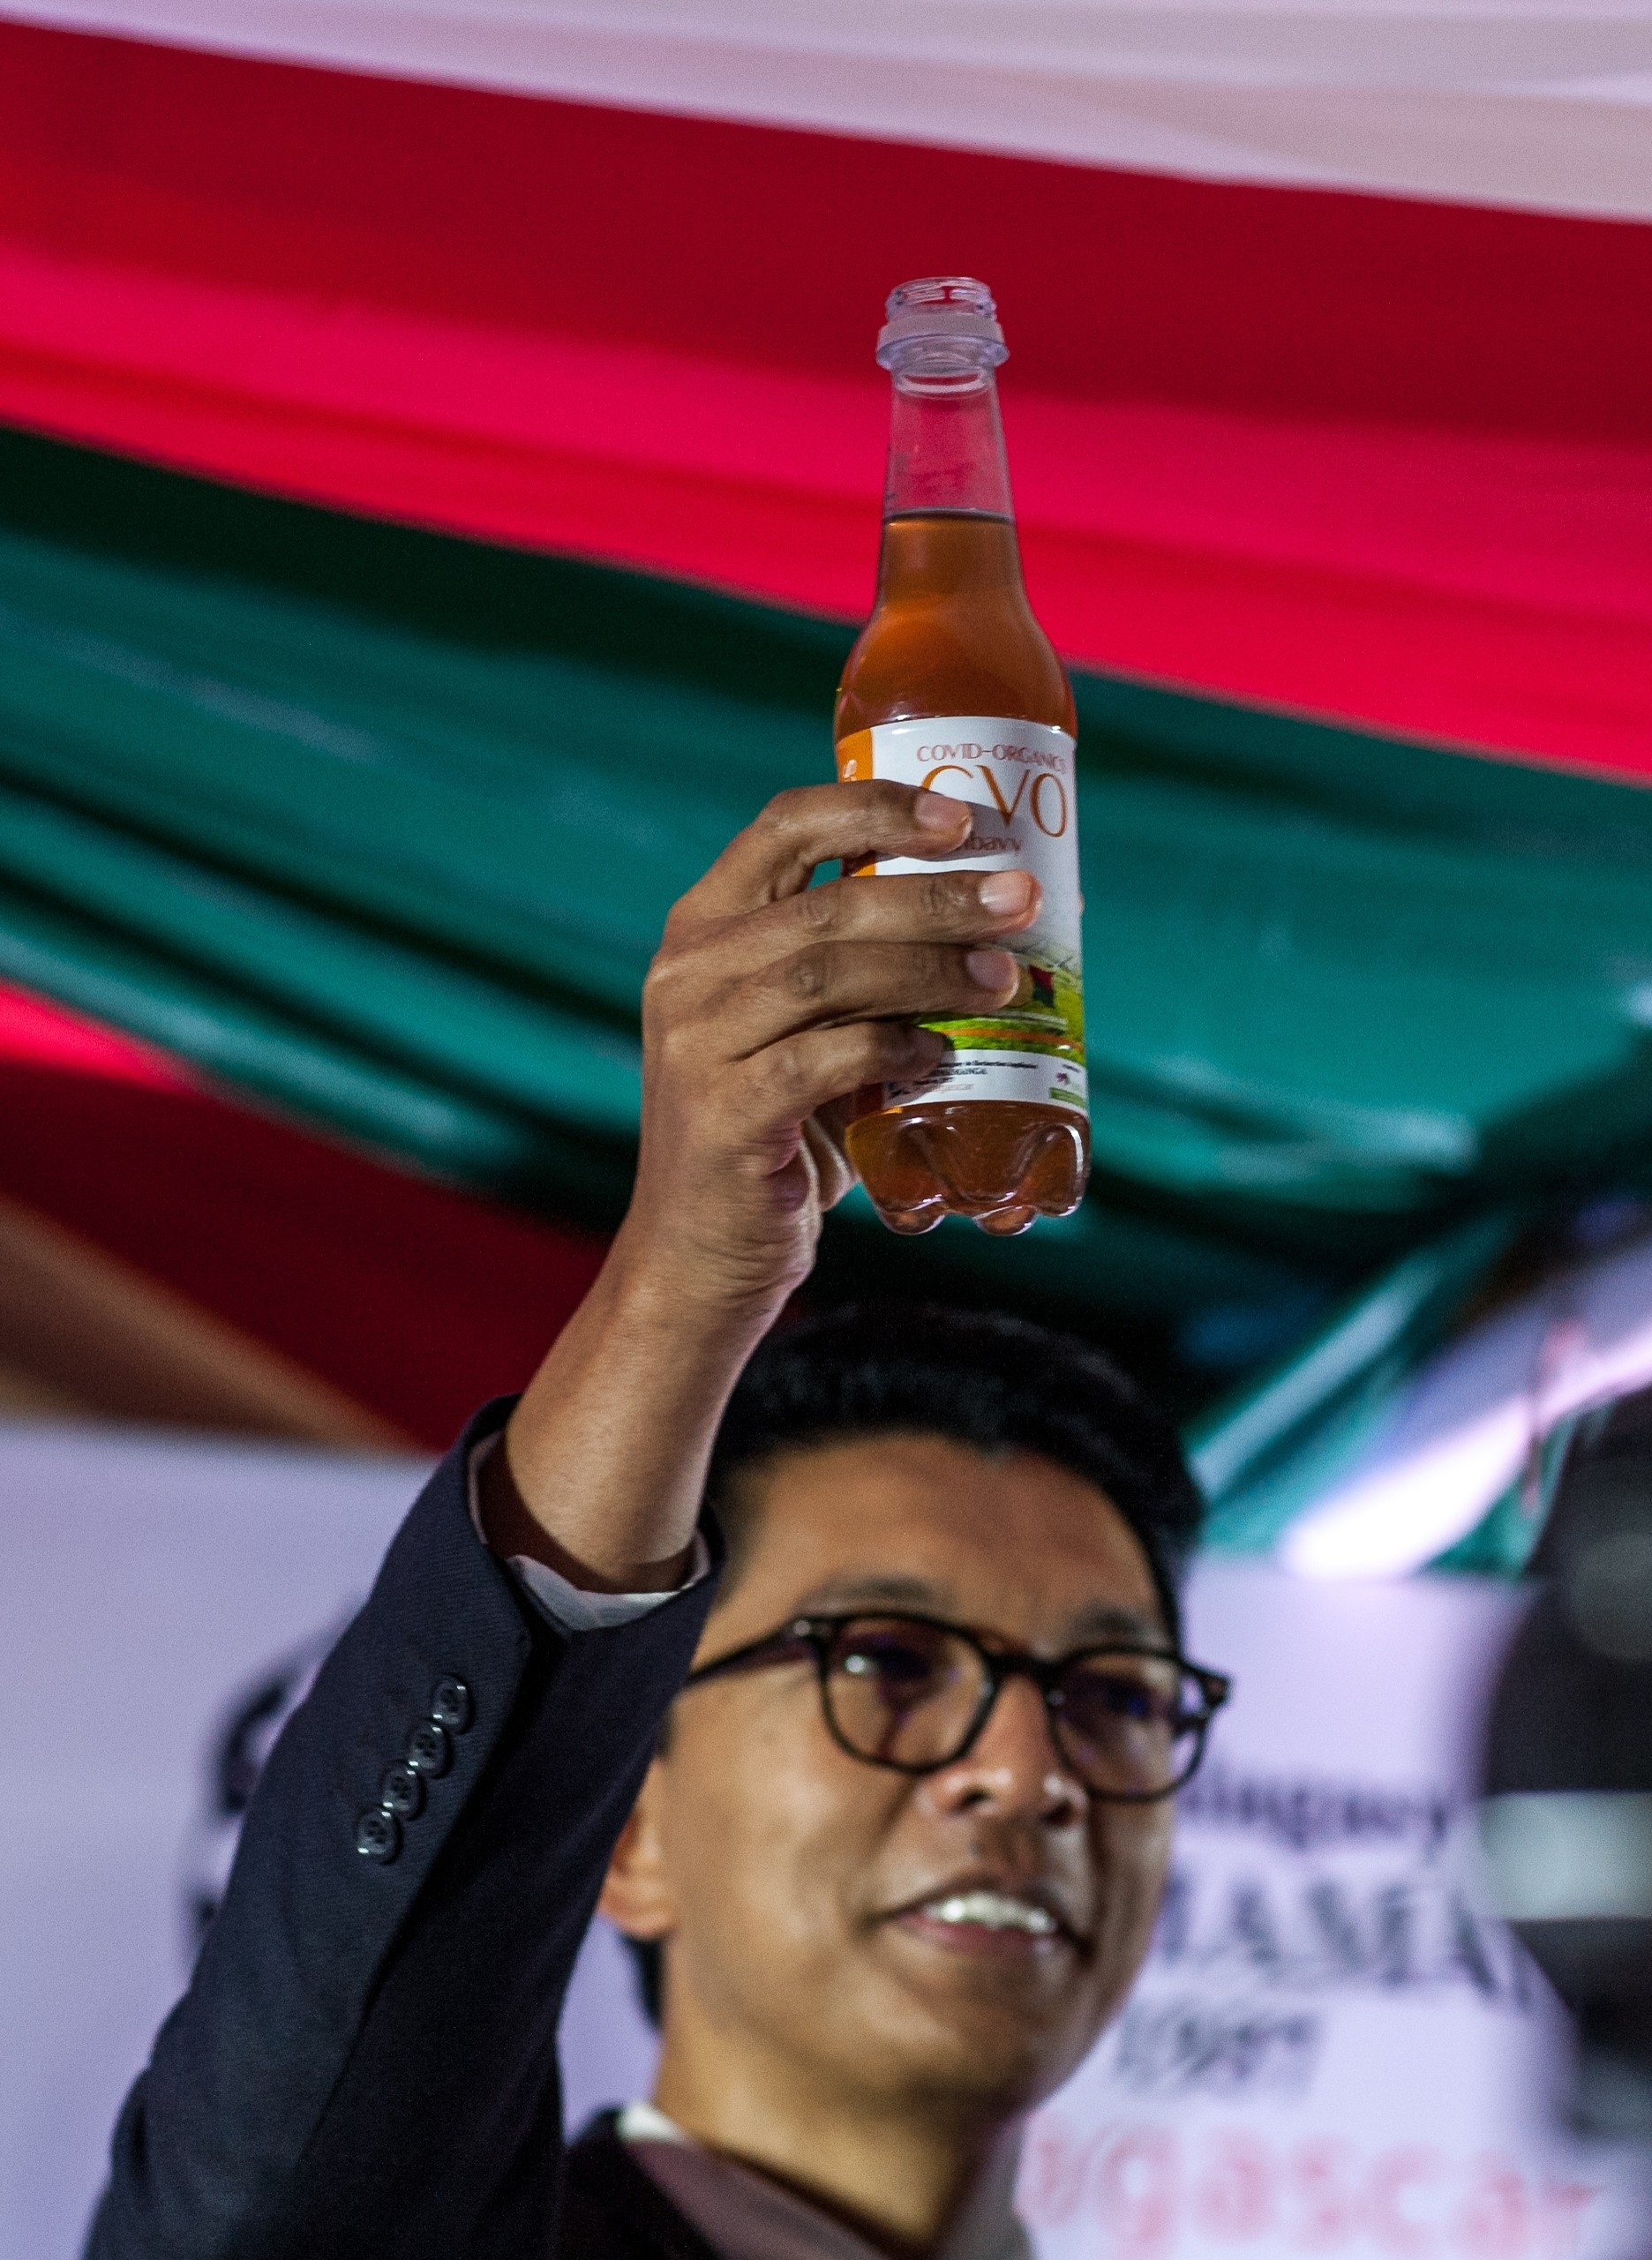 Le président malgacche,, Andry Rajoelina, présente le « Covid Organics », un « remède » à base d'armoise contre le Covid-19, Tananarive, 20 avril 2020. ©Henitsoa Rafalia / Anadolu Agency / AFP